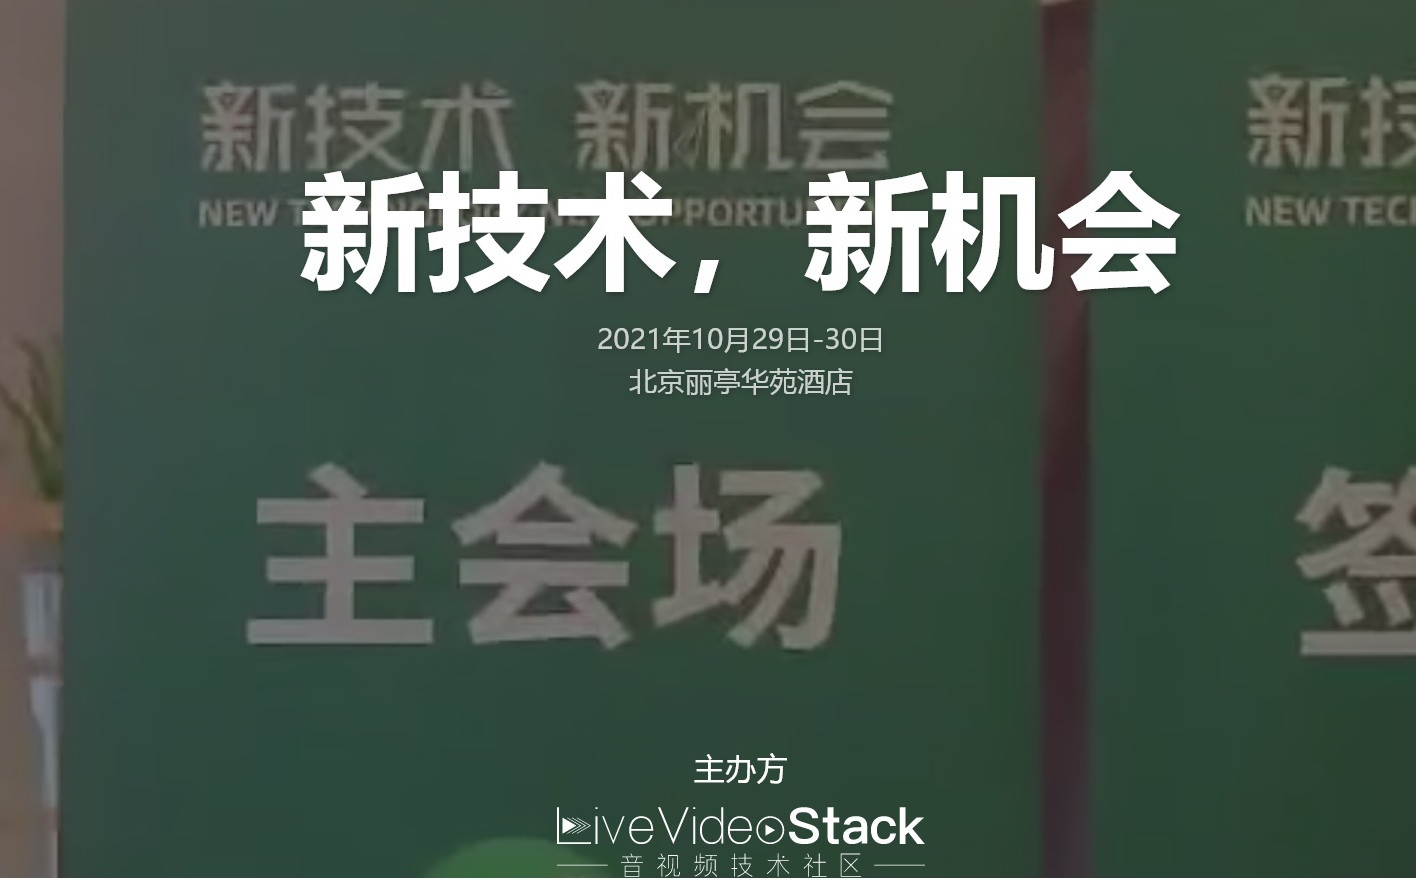 LiveVideoStackCon 2021北京（音視頻技術大會）